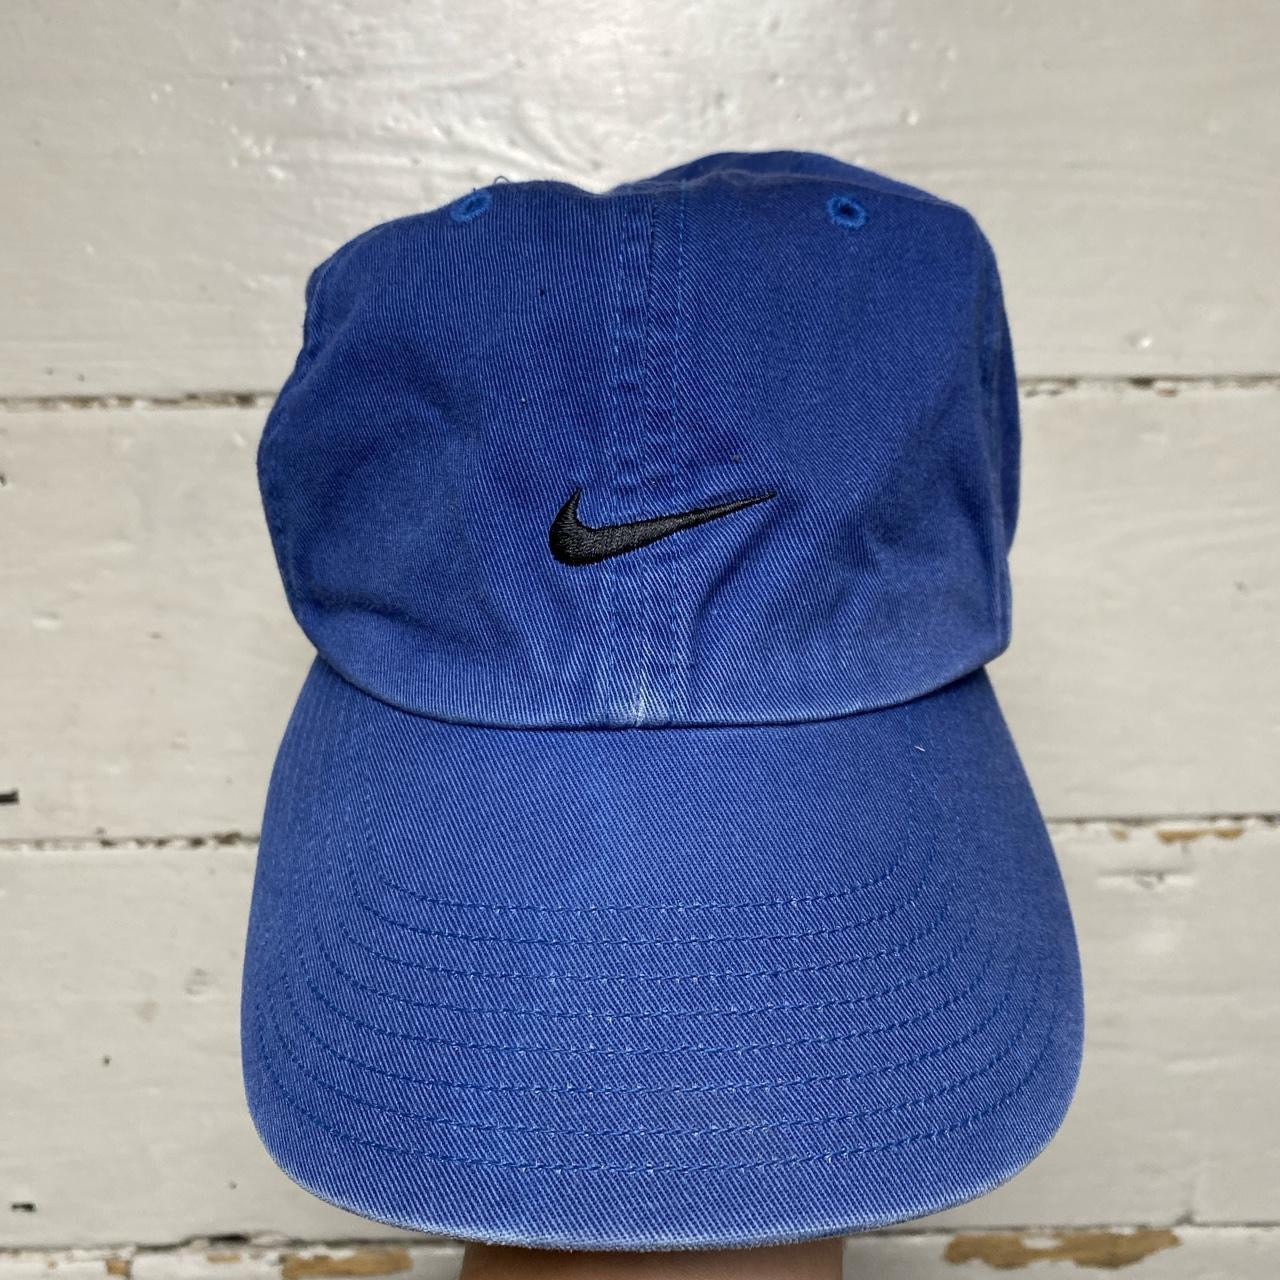 Nike Vintage Swoosh Cap